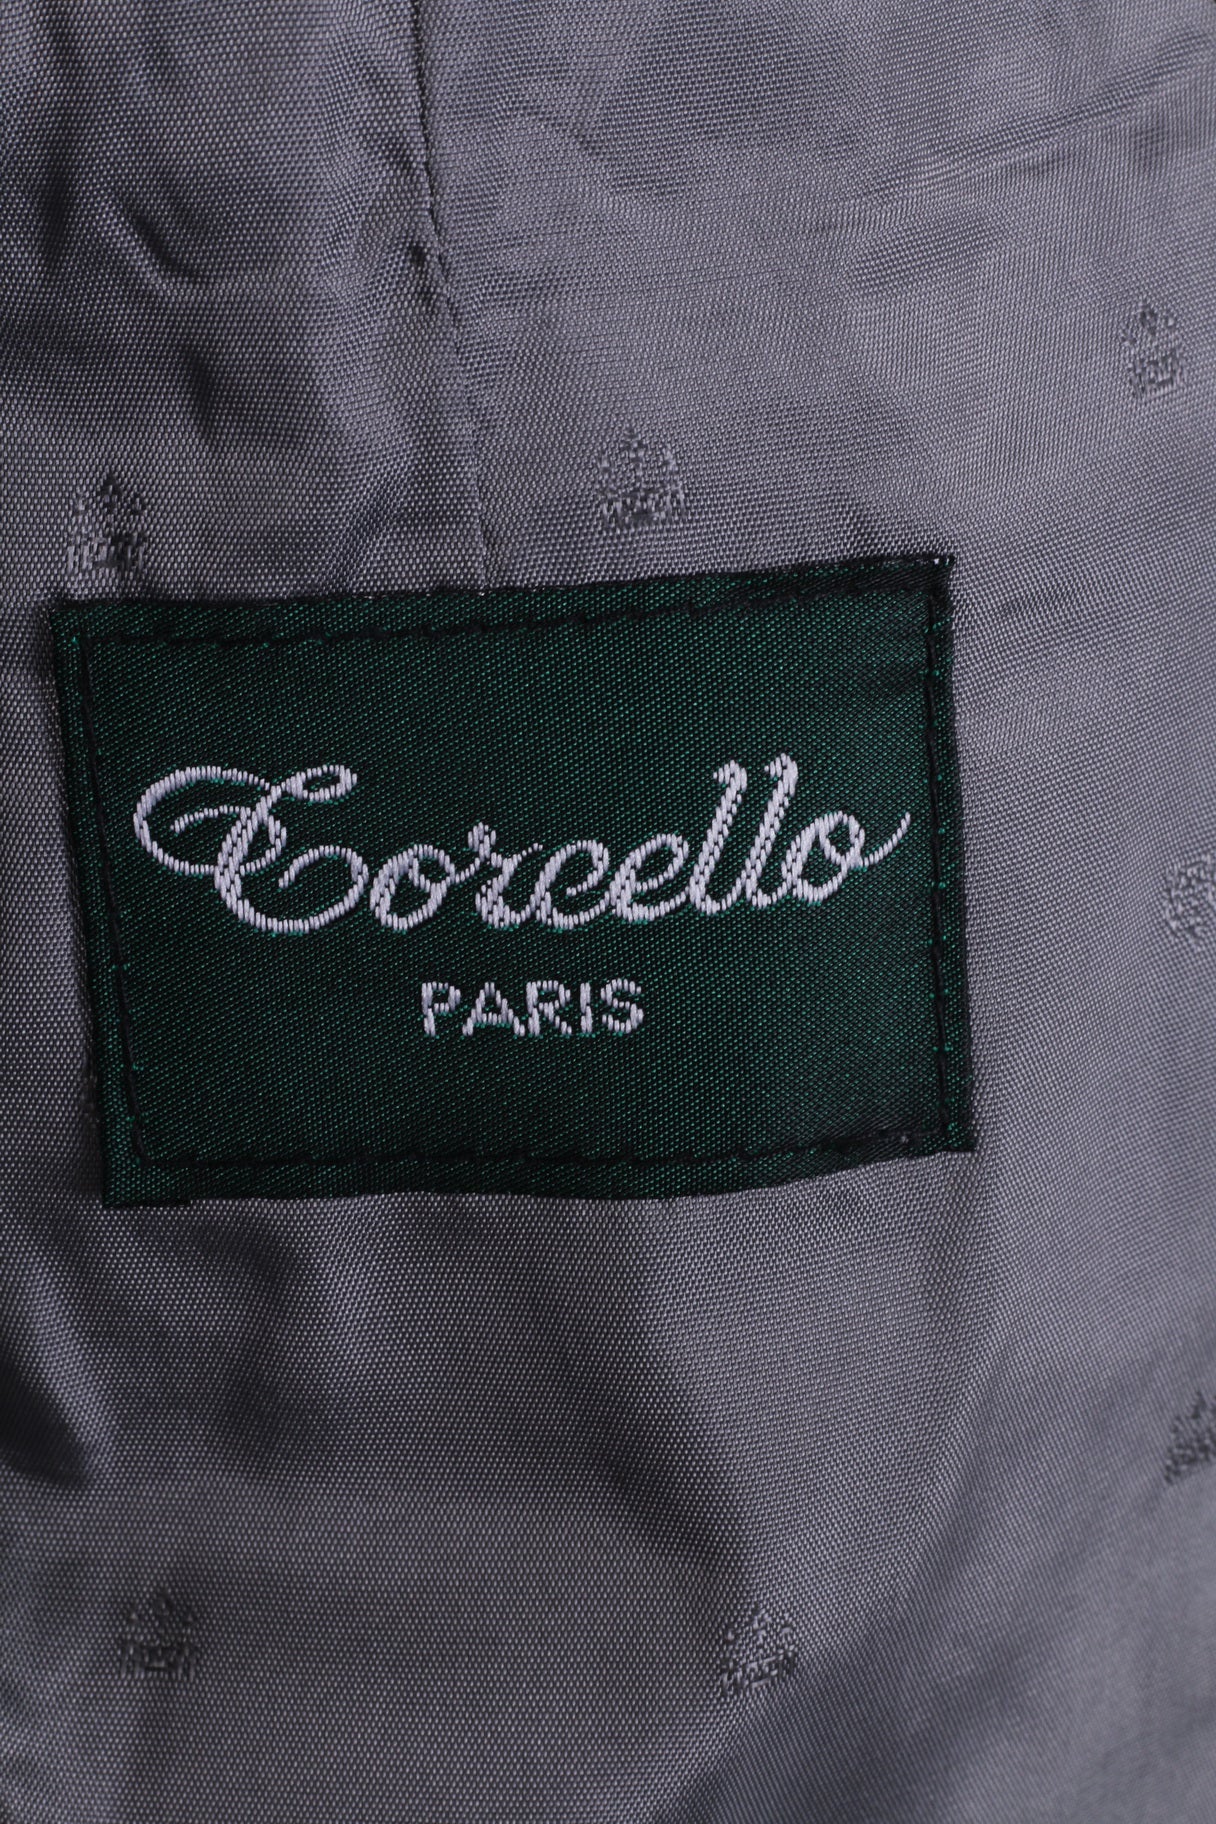 Coreello Paris Blazer da donna in lana grigia Giacca in lana pettinata vintage Moorside 